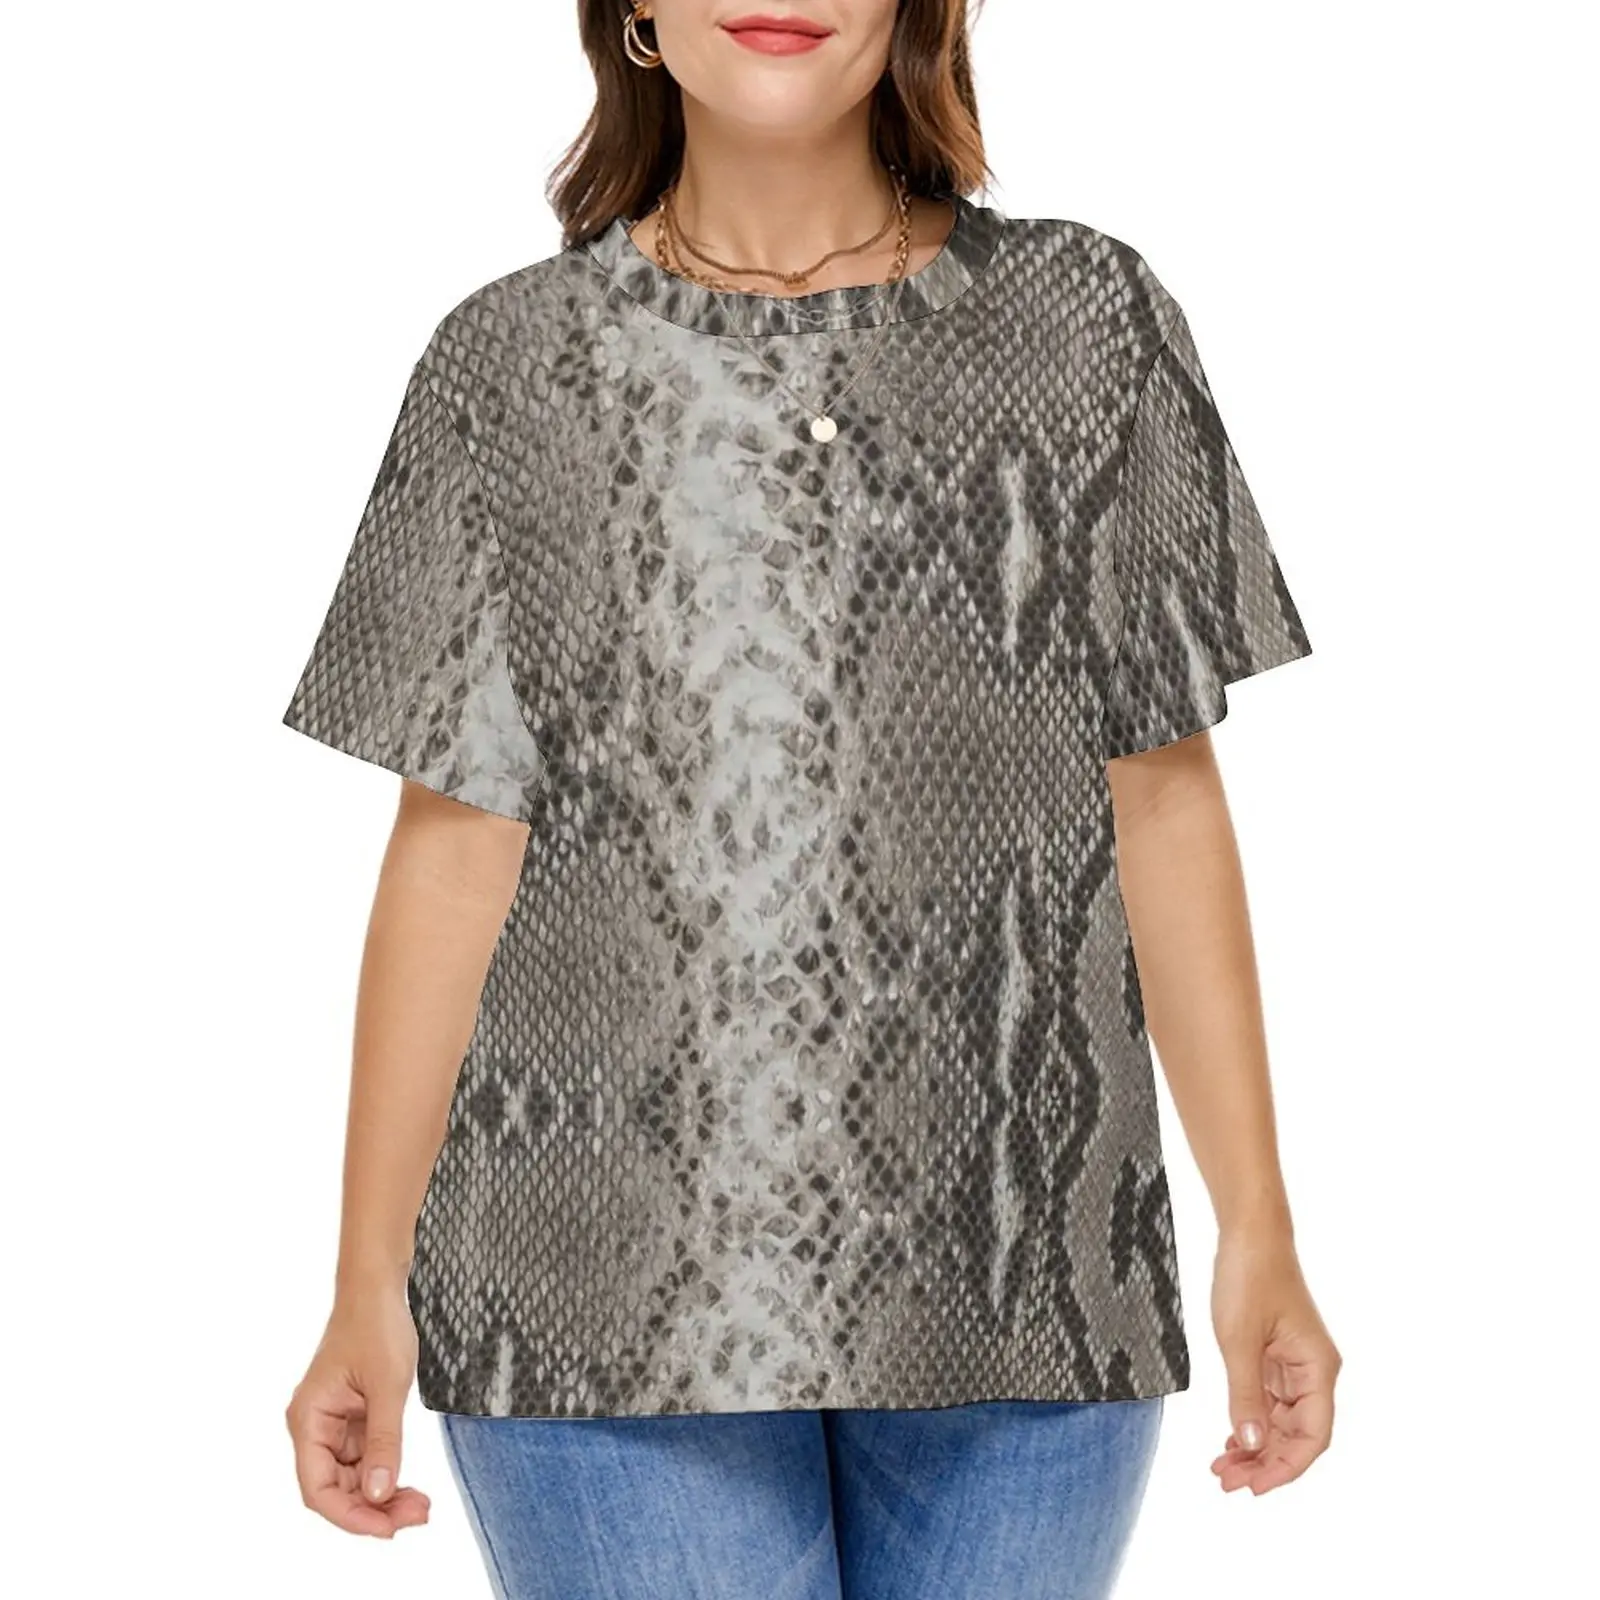 Snakeskin Python T Shirt Classic Faux Animal Skin Print Funny T Shirts Short Sleeve Classic Tees Women Clothing Plus Size 6XL